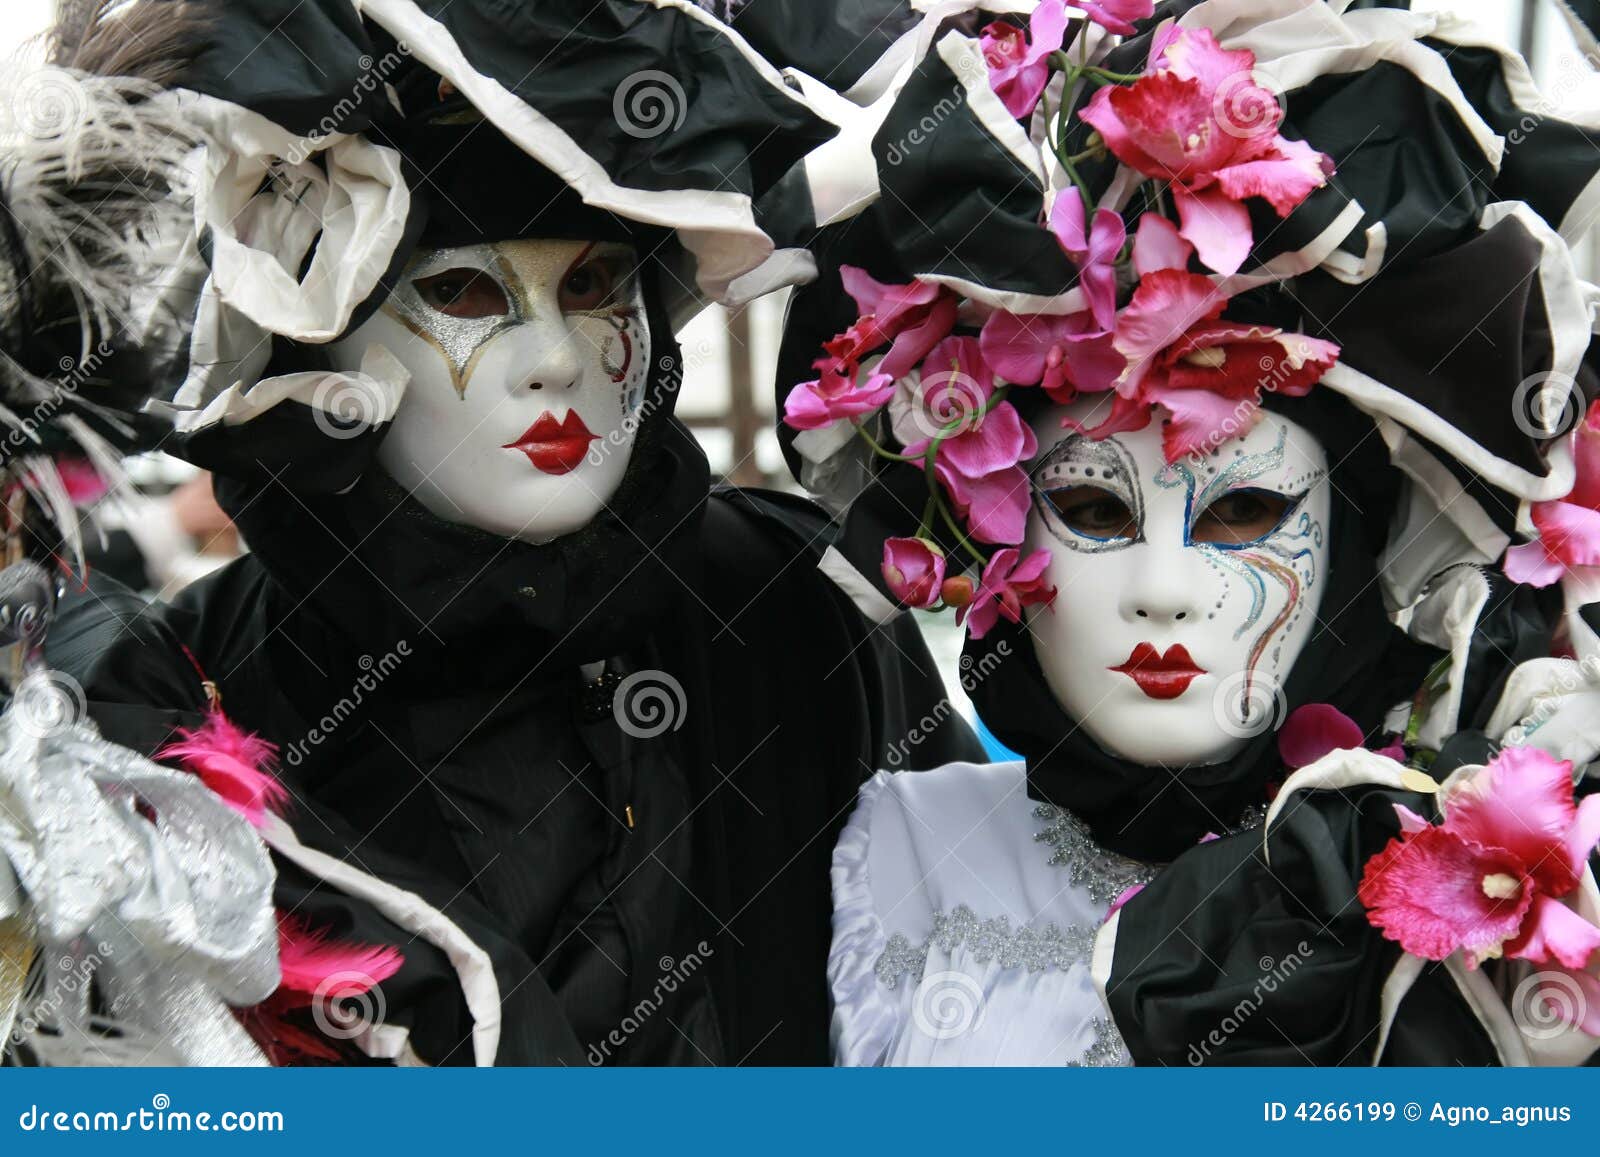 Máscara - carnaval - Veneza. Algum pics da terça-feira gorda em Veneza